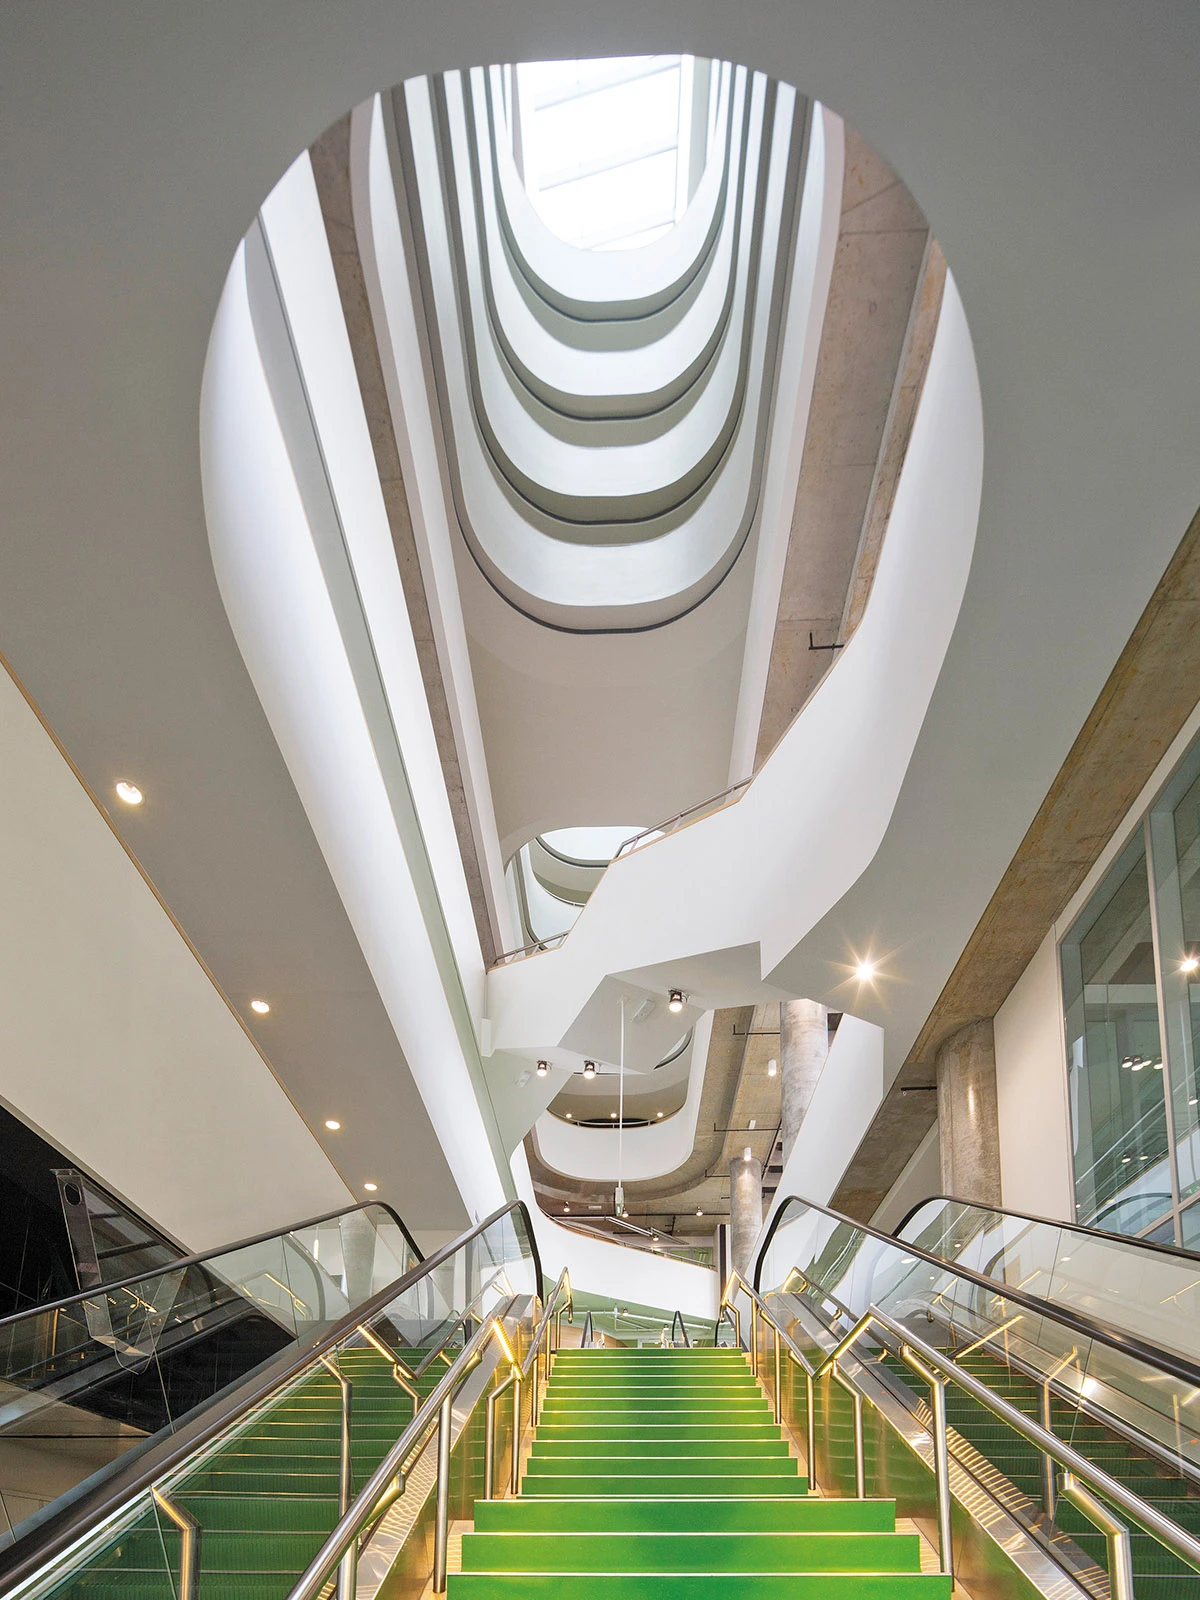 Interior stairwell of Swinburne Advanced Manufacturing and Design Centre